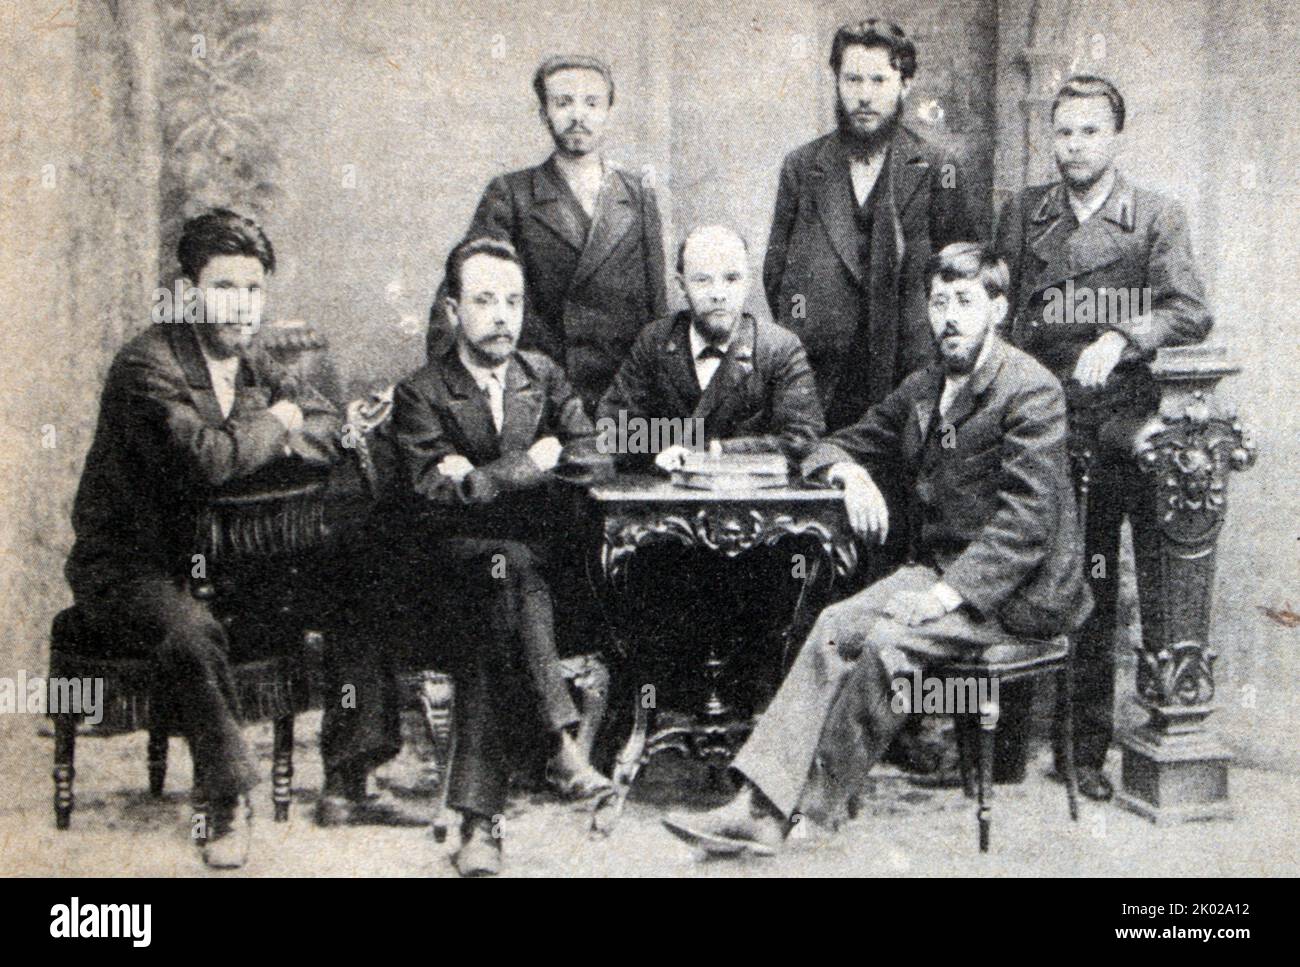 Miembros de la Unión de Lucha por la Liberación de la Clase Obrera (de izquierda a derecha:) V.V. Starkov, G.M. Krzhizhanovsky, A.L. Malchenko, V.I. Lenin, P.K. Zaporozhets, Yu.O. Martov, A.A. Vaneev. Foto de 1895. Foto de stock